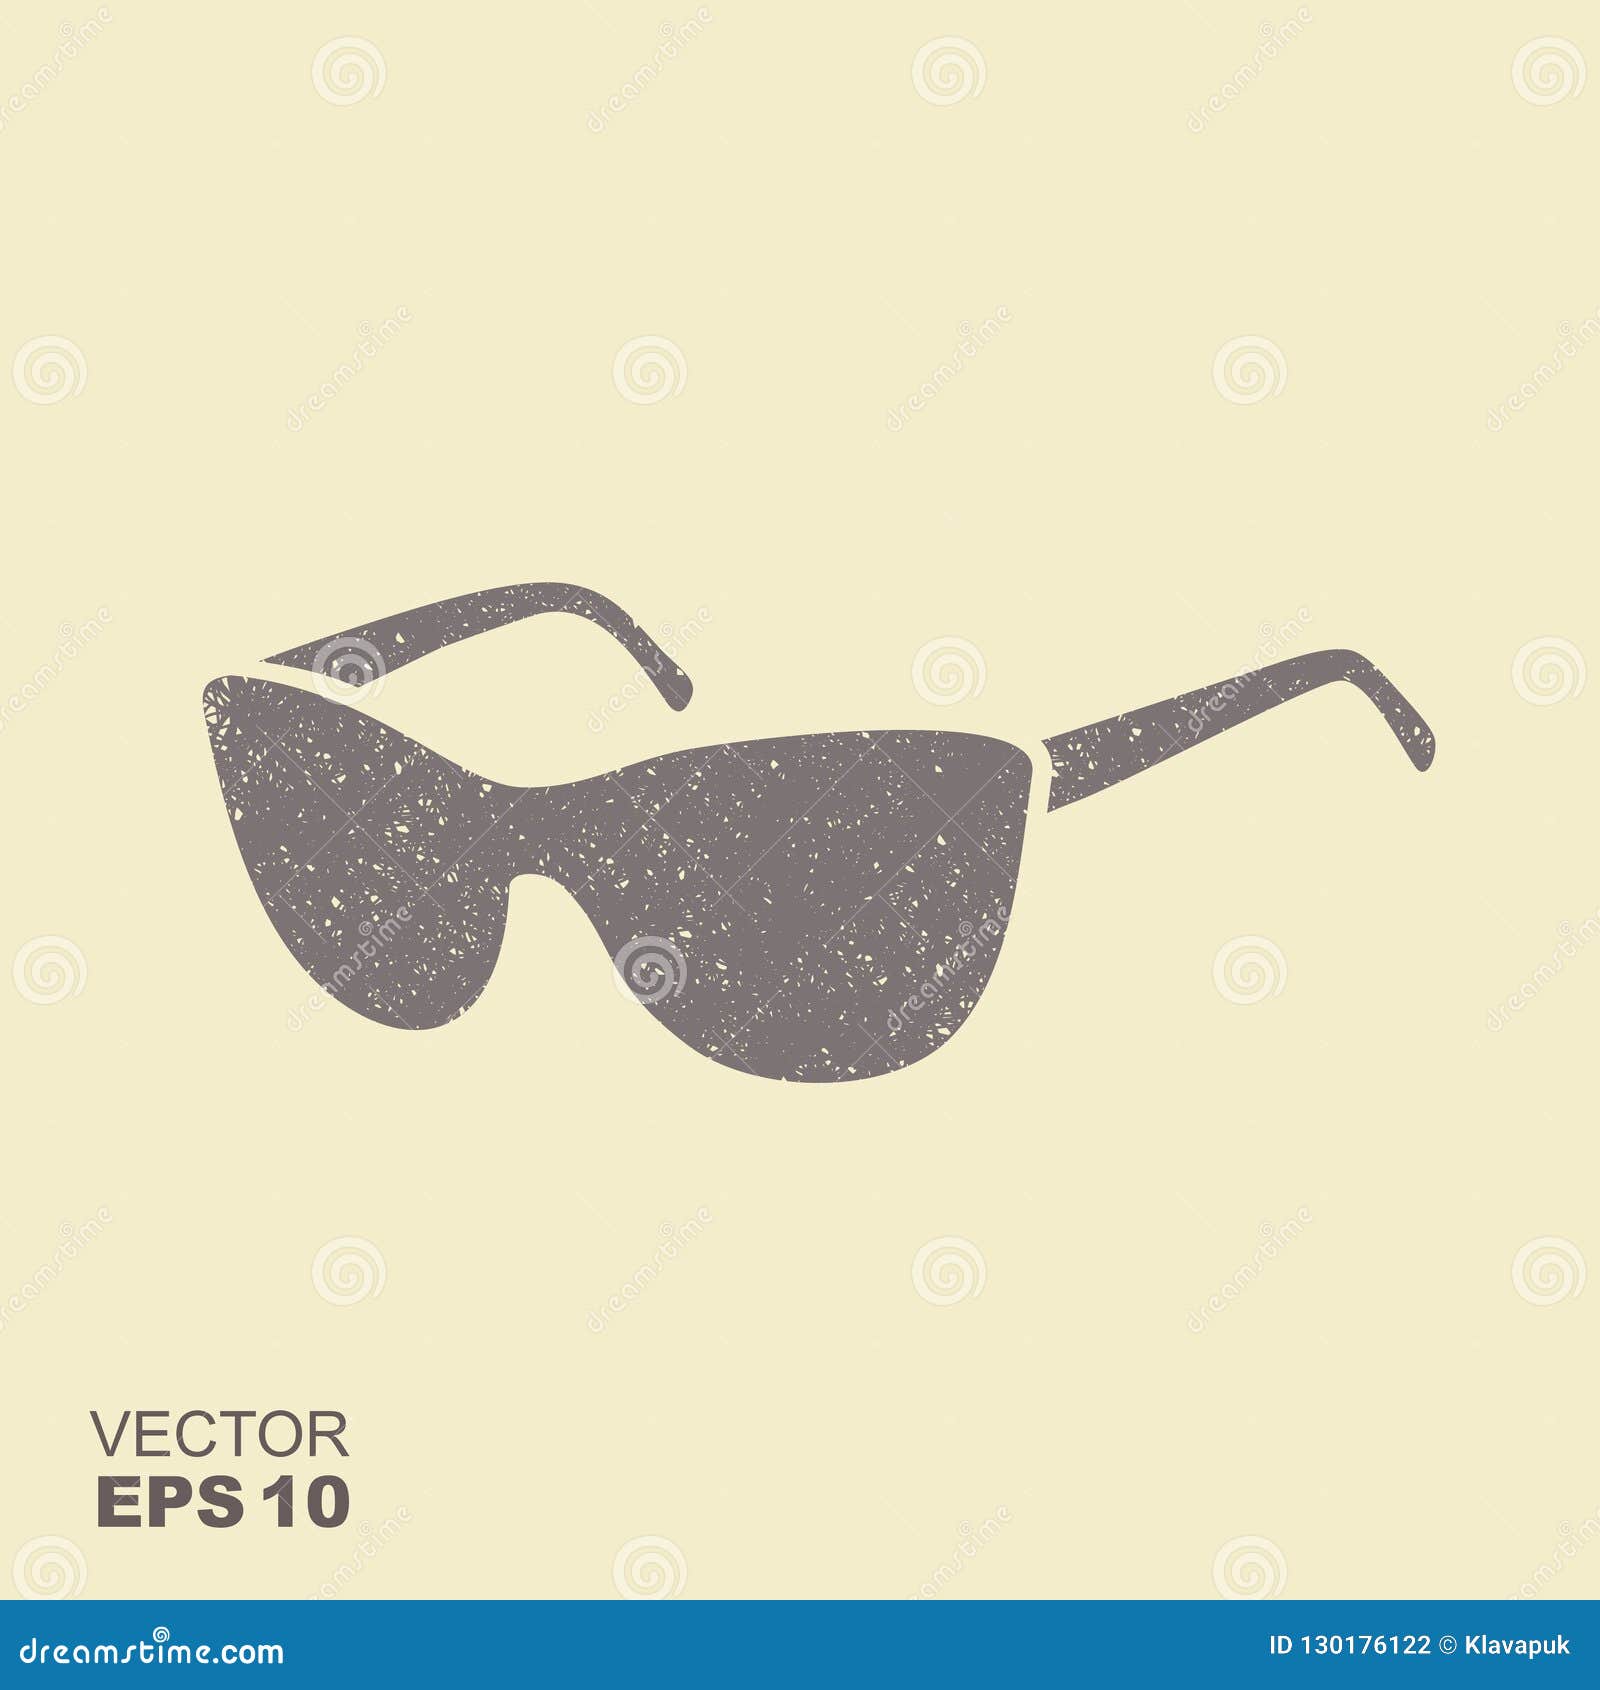 sunglasses icon   with scuffed effect